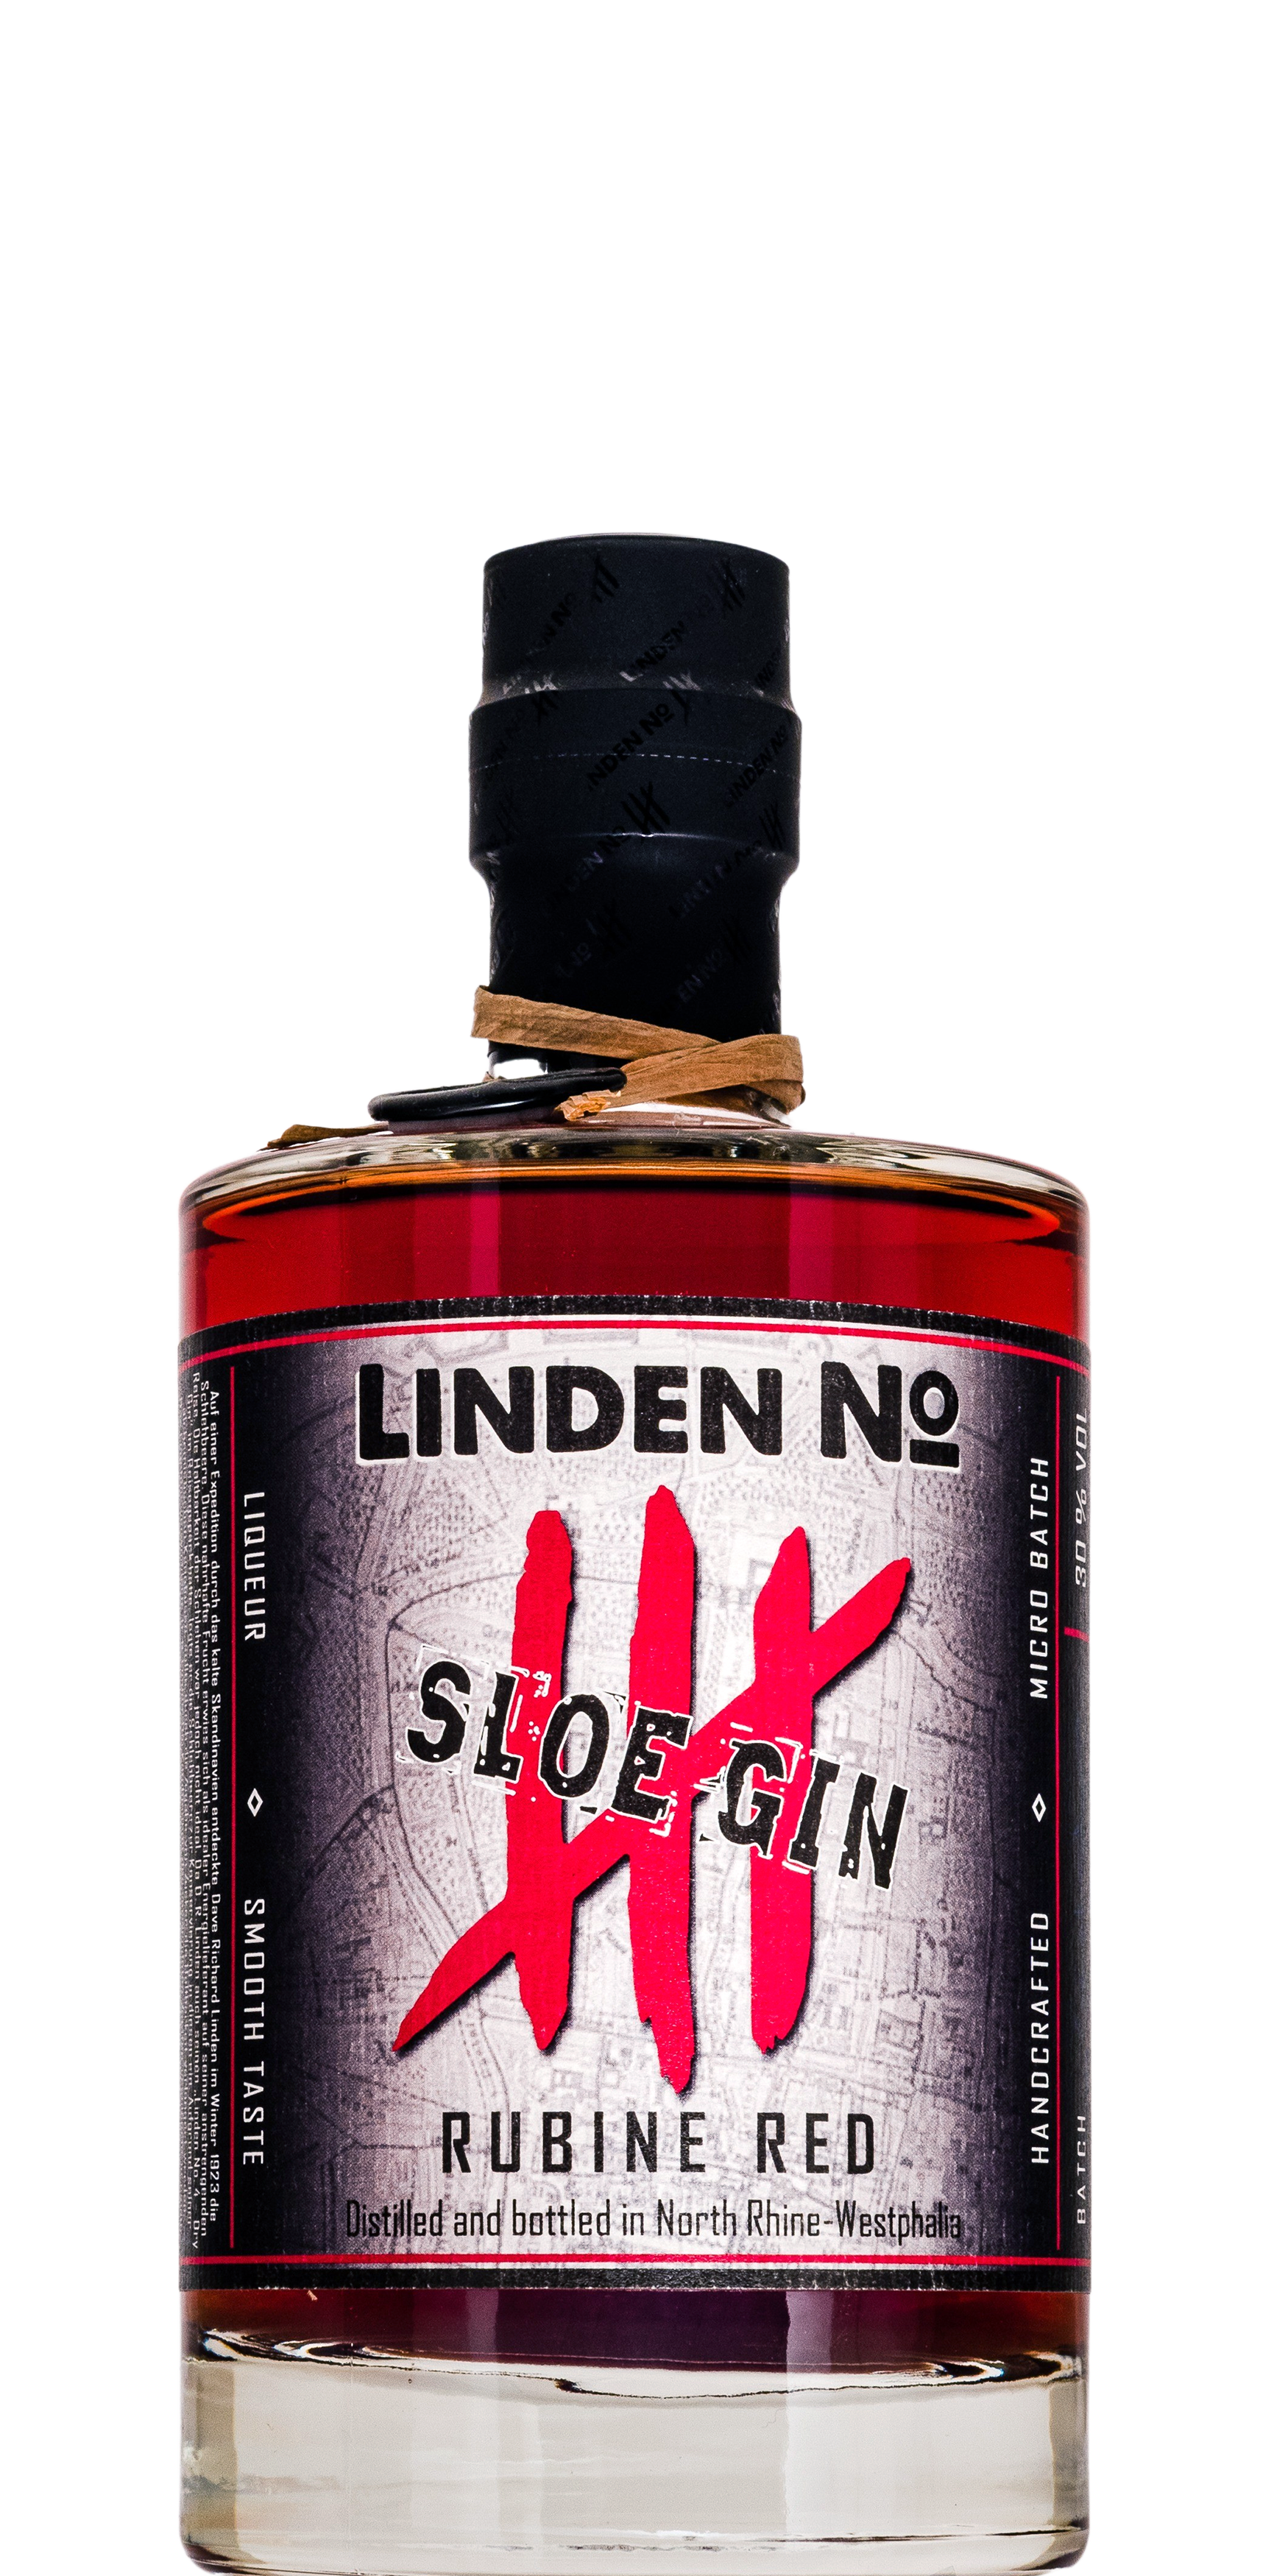 linden-no-4-sloe-gin-rubine-red-gin-500ml.png